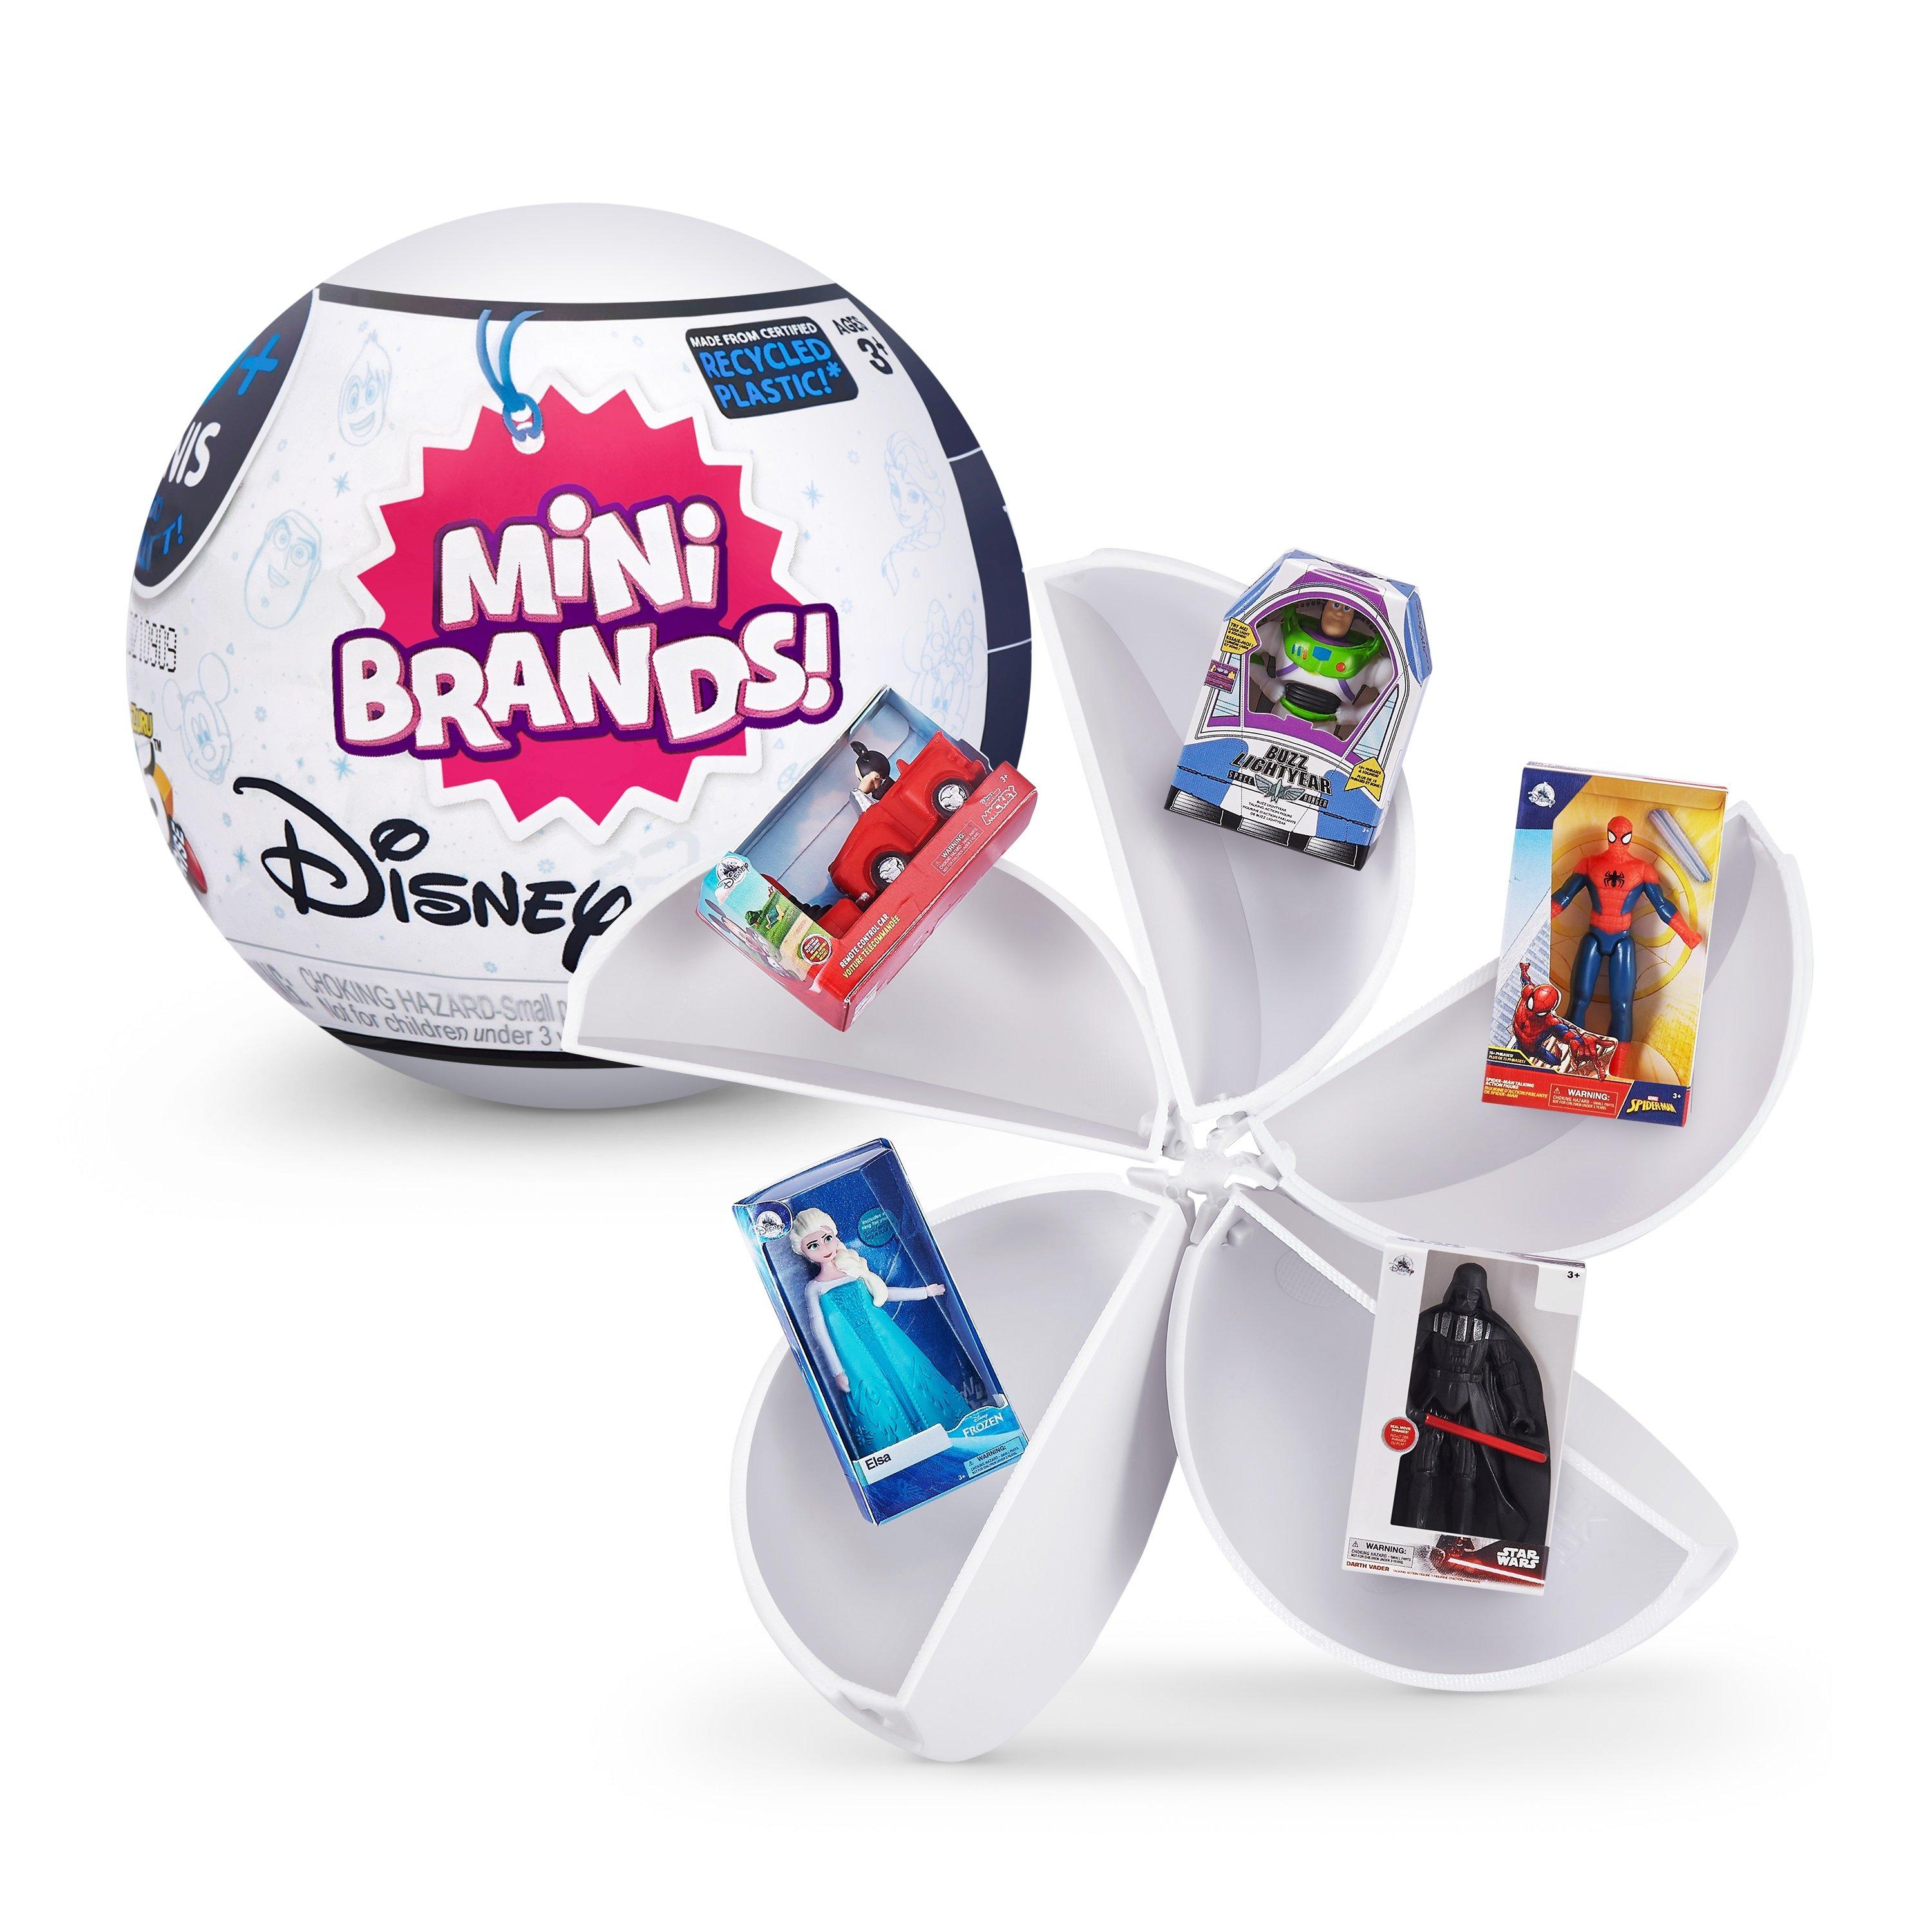 https://media.gamestop.com/i/gamestop/11154611_ALT07/ZURU-5-Surprise-Mini-Brands-Disney-Store-Series-1-Mystery-Capsule?$pdp$